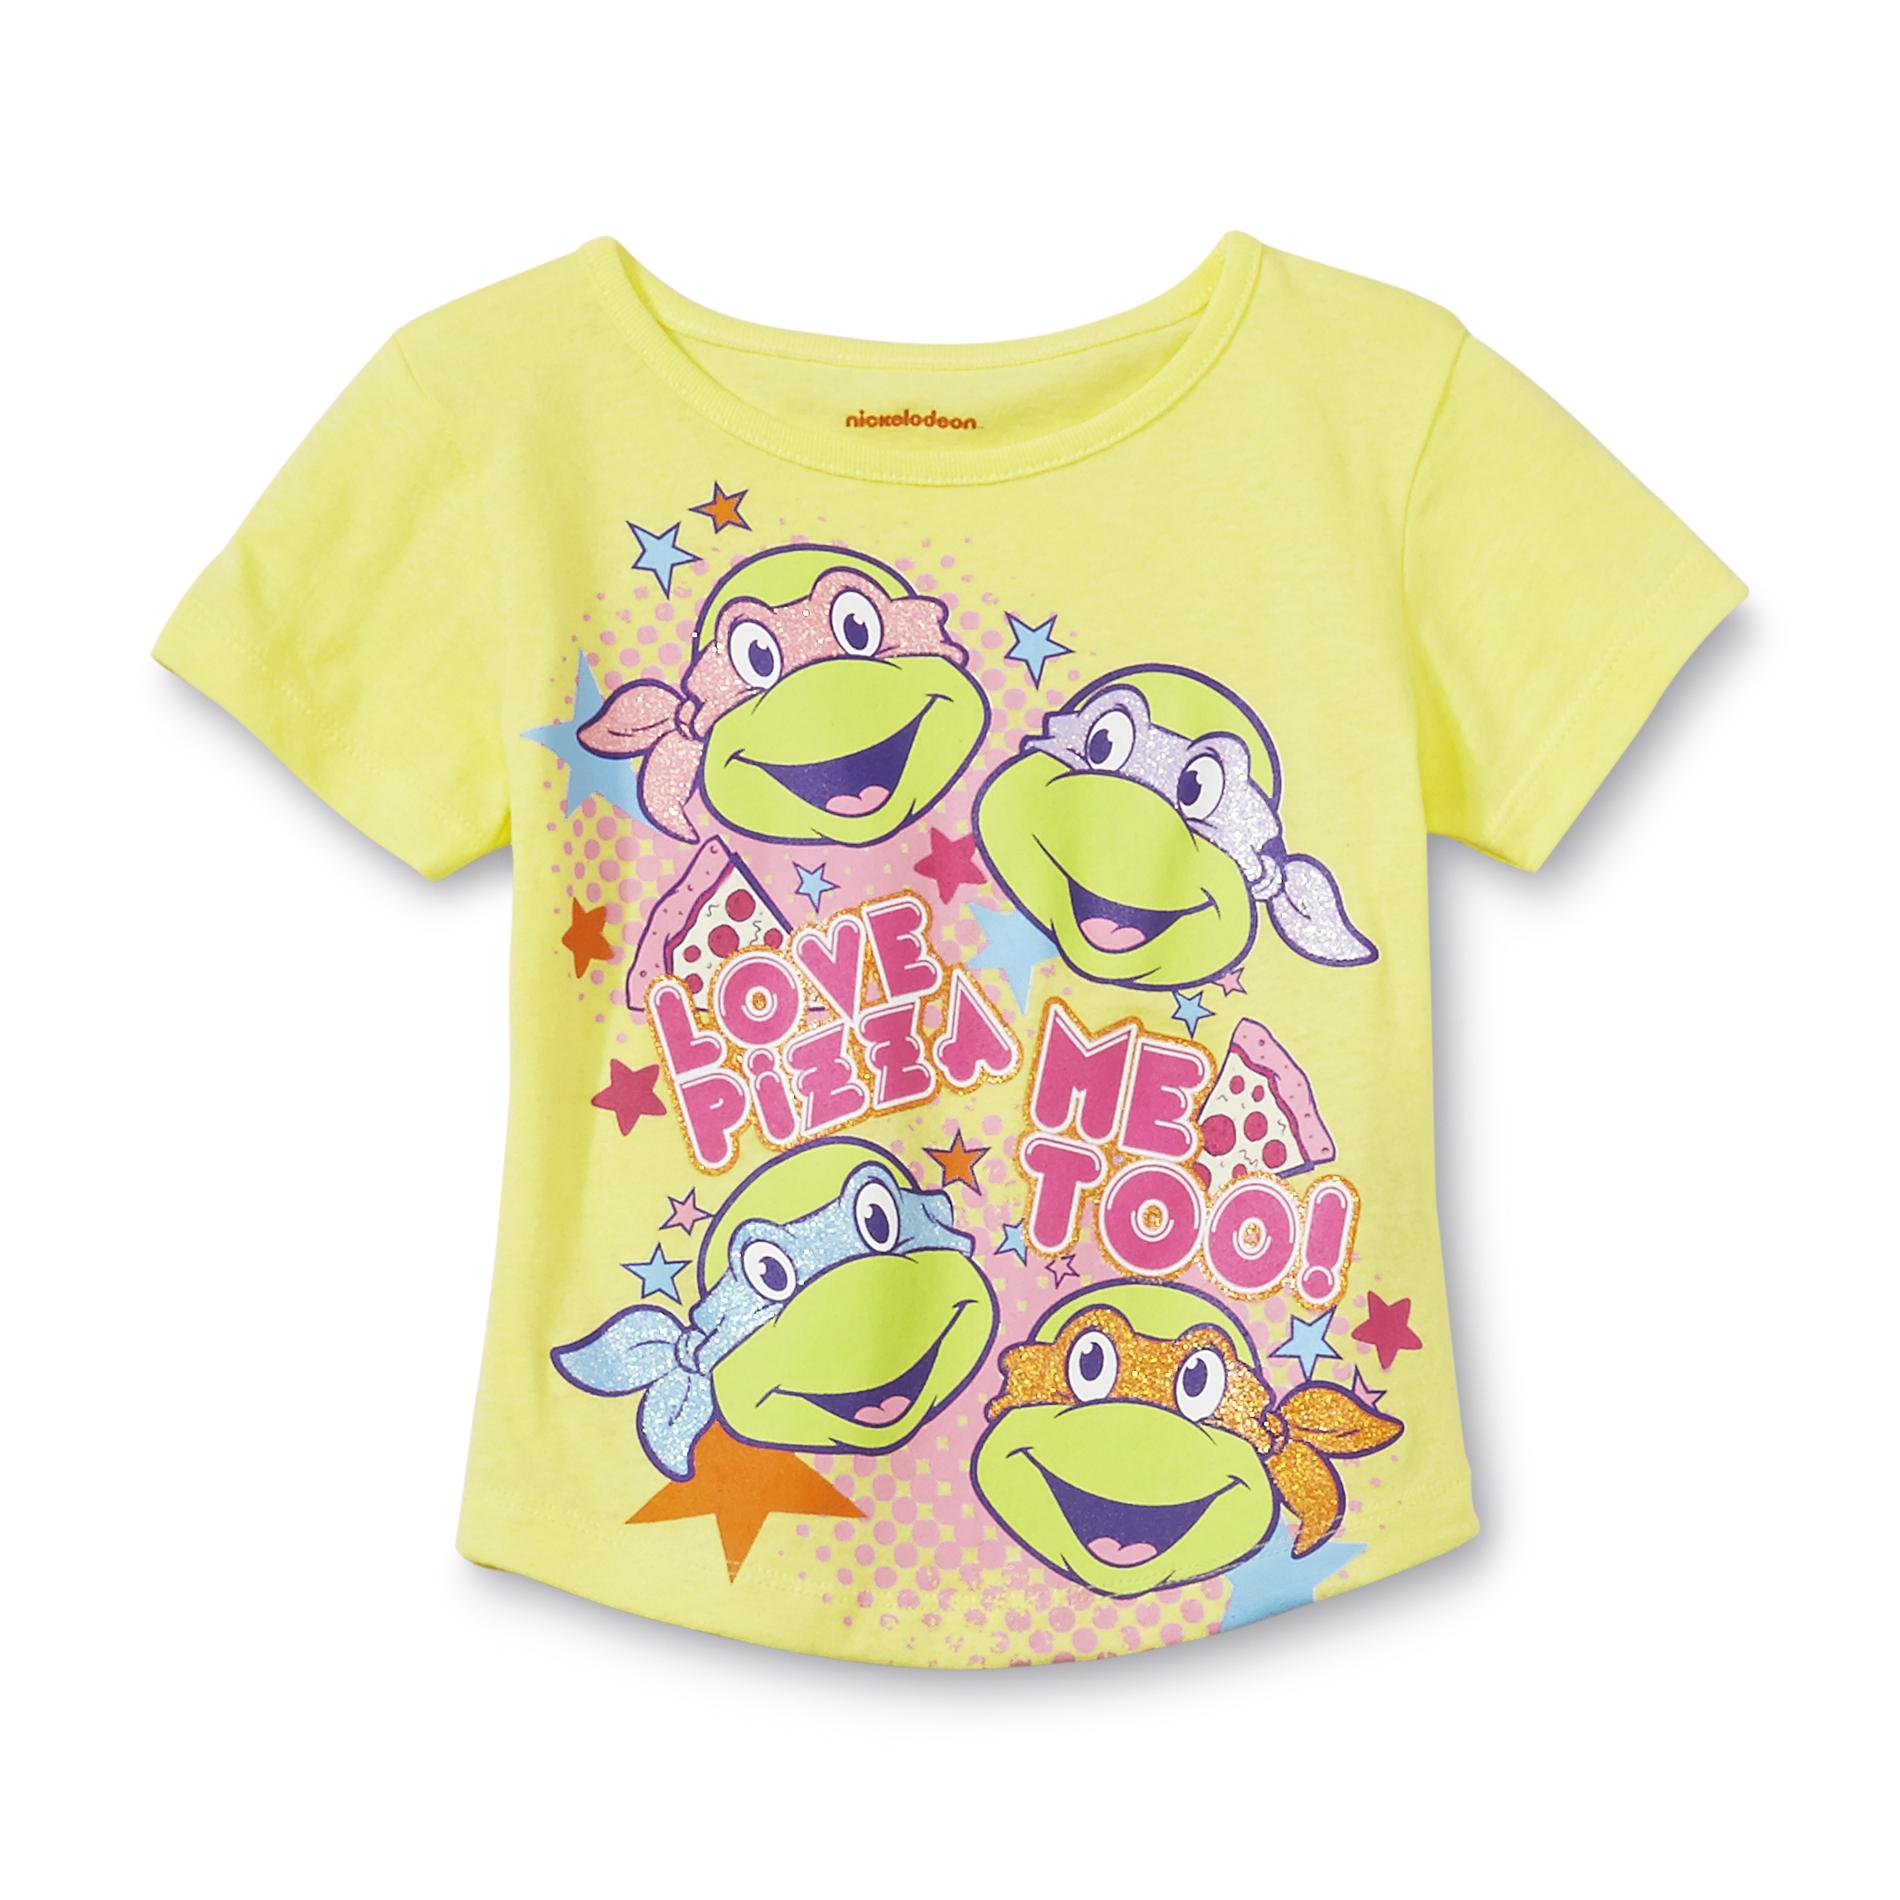 Nickelodeon Teenage Mutant Ninja Turtles Toddler Girl's T-Shirt